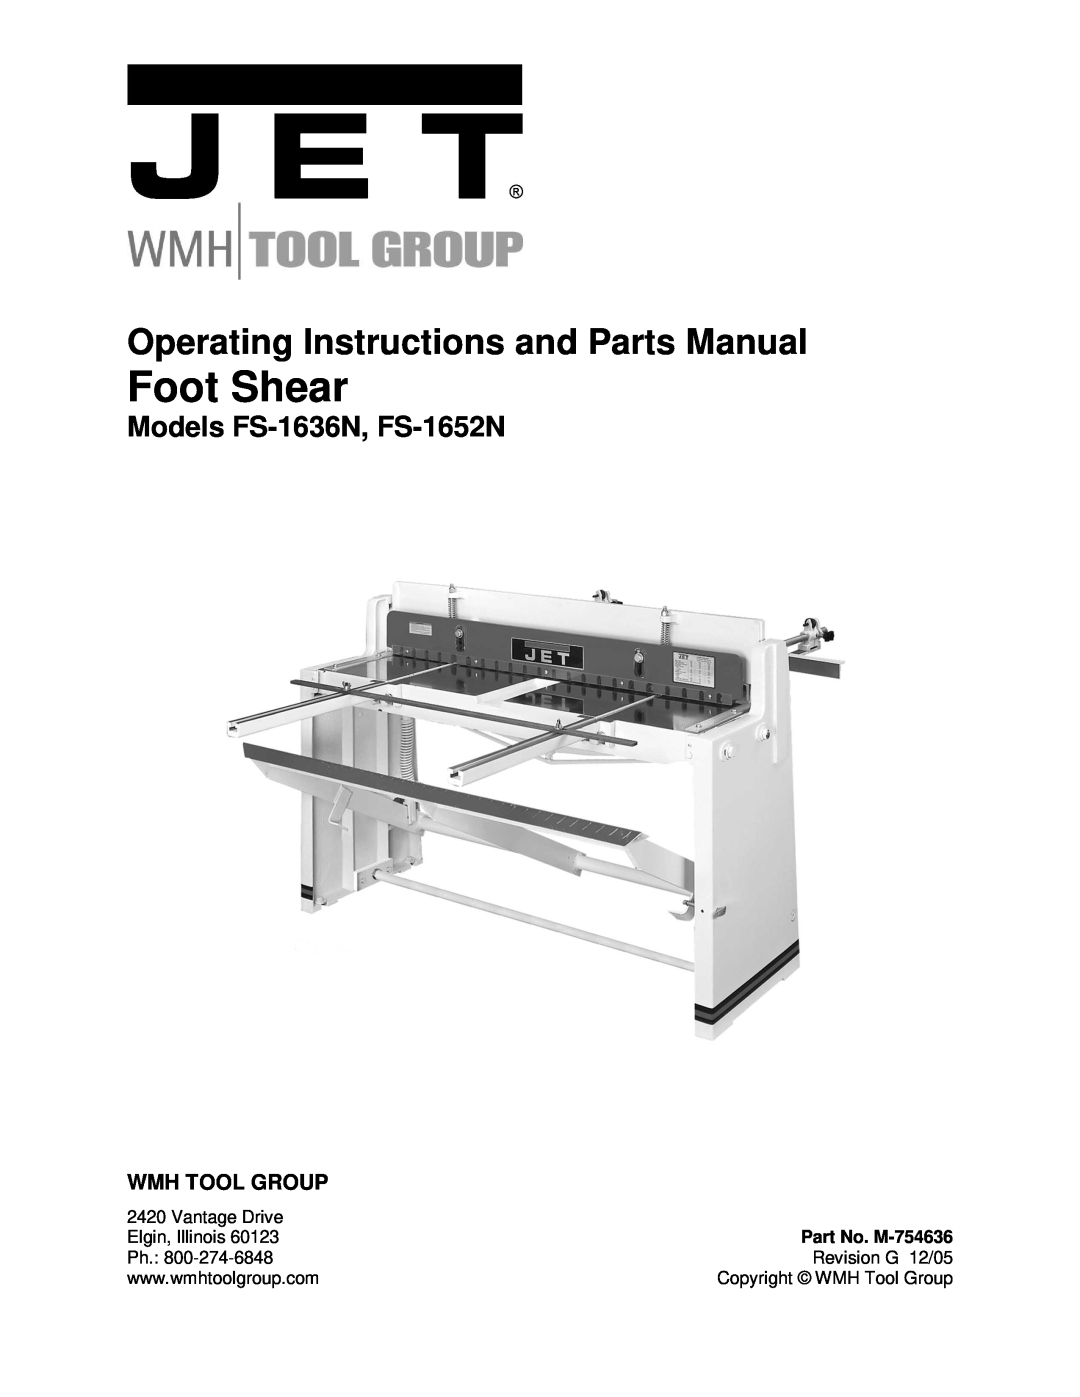 Jet Tools operating instructions Models FS-1636N, FS-1652N, Foot Shear, Operating Instructions and Parts Manual 